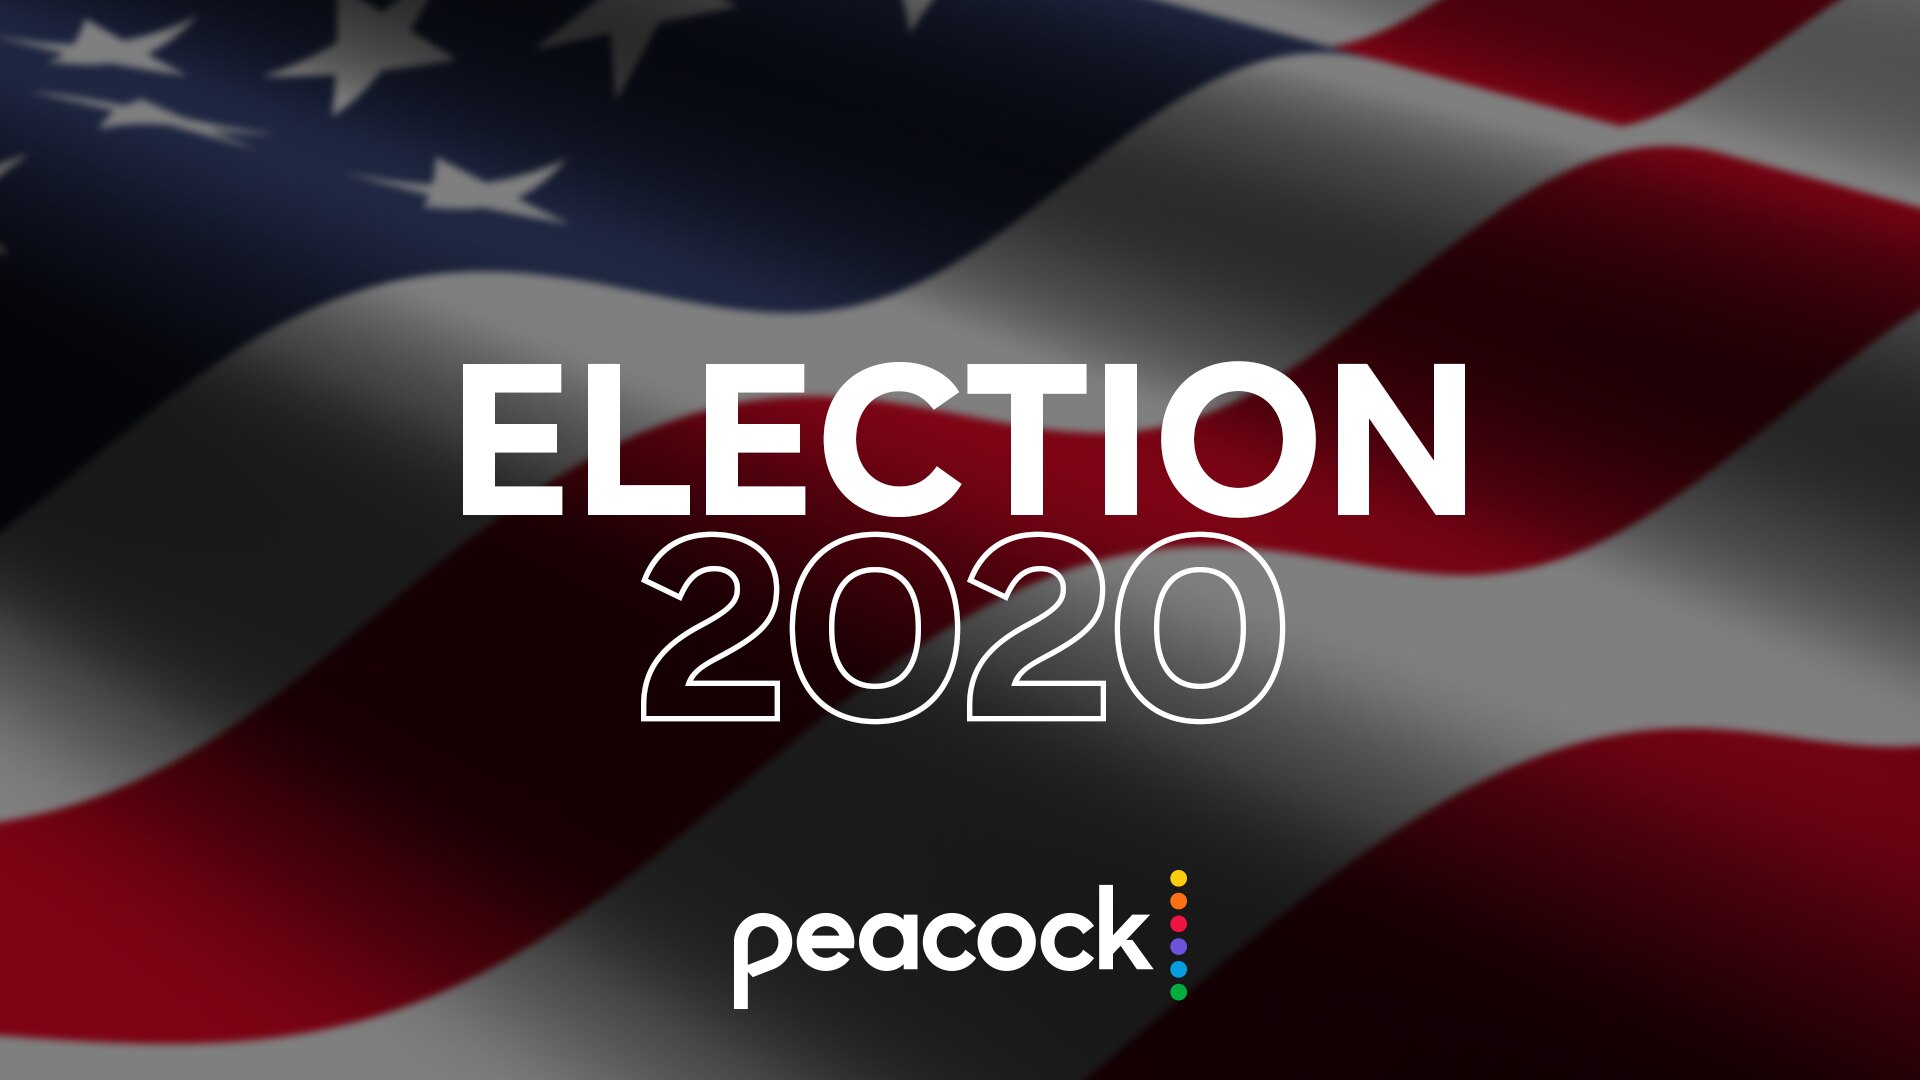 Watch Peacock Trailer ELECTION 2020 (Trailer)